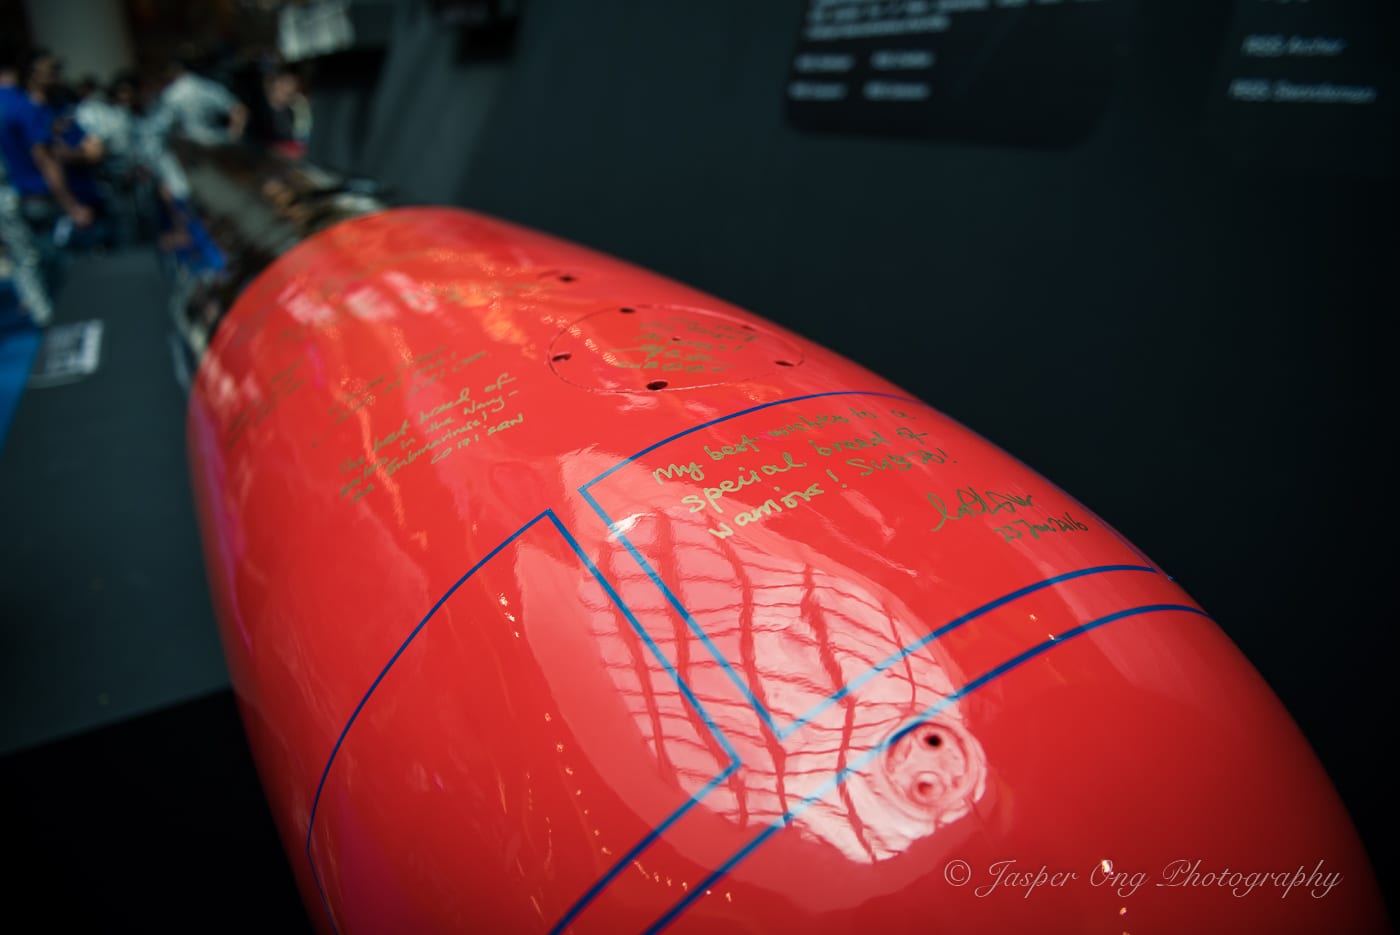 Autograph on the torpedo exhibit